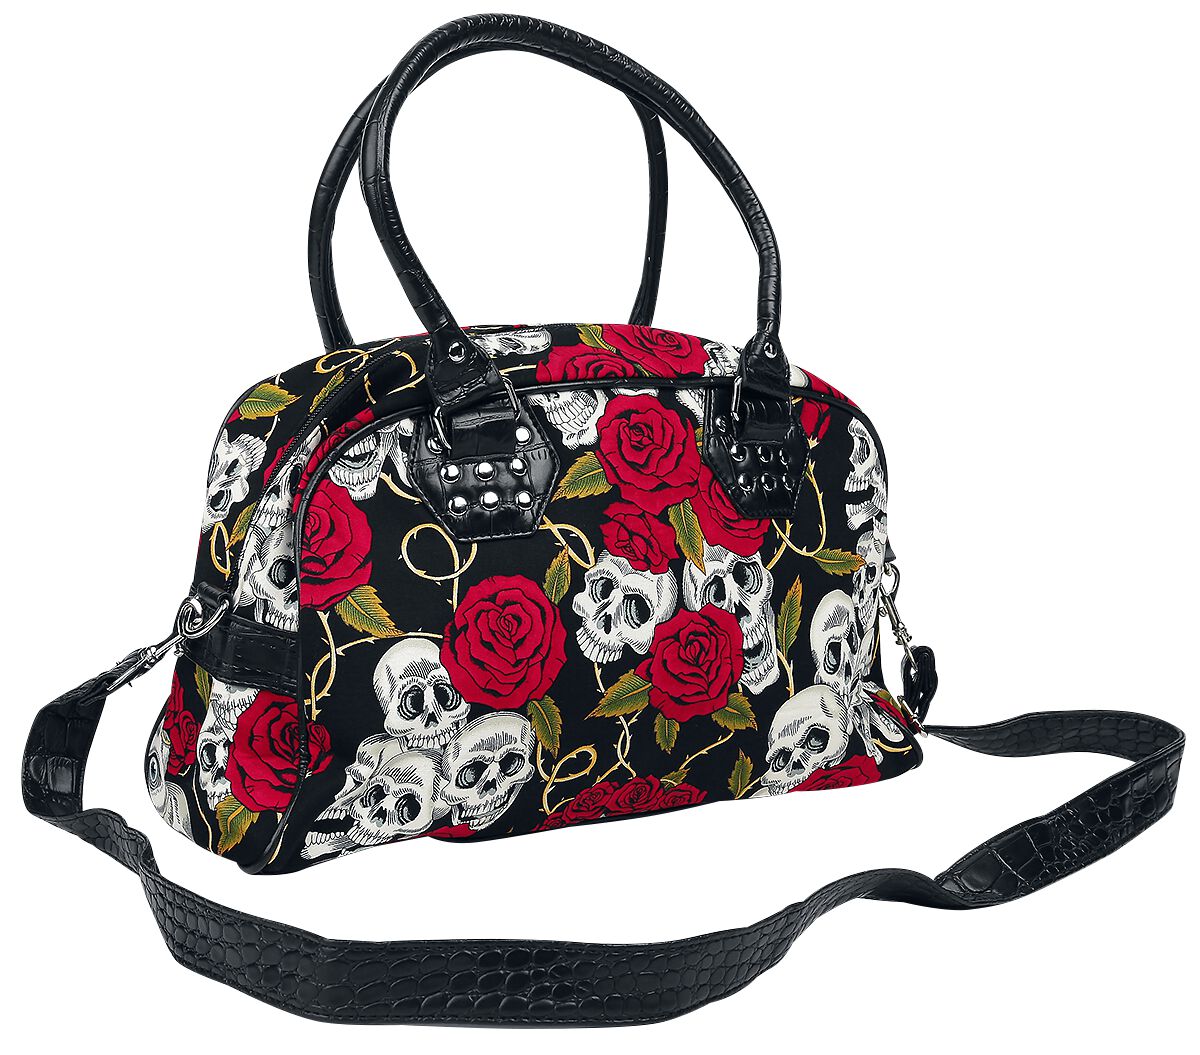 Banned Skulls and Roses Handbag black